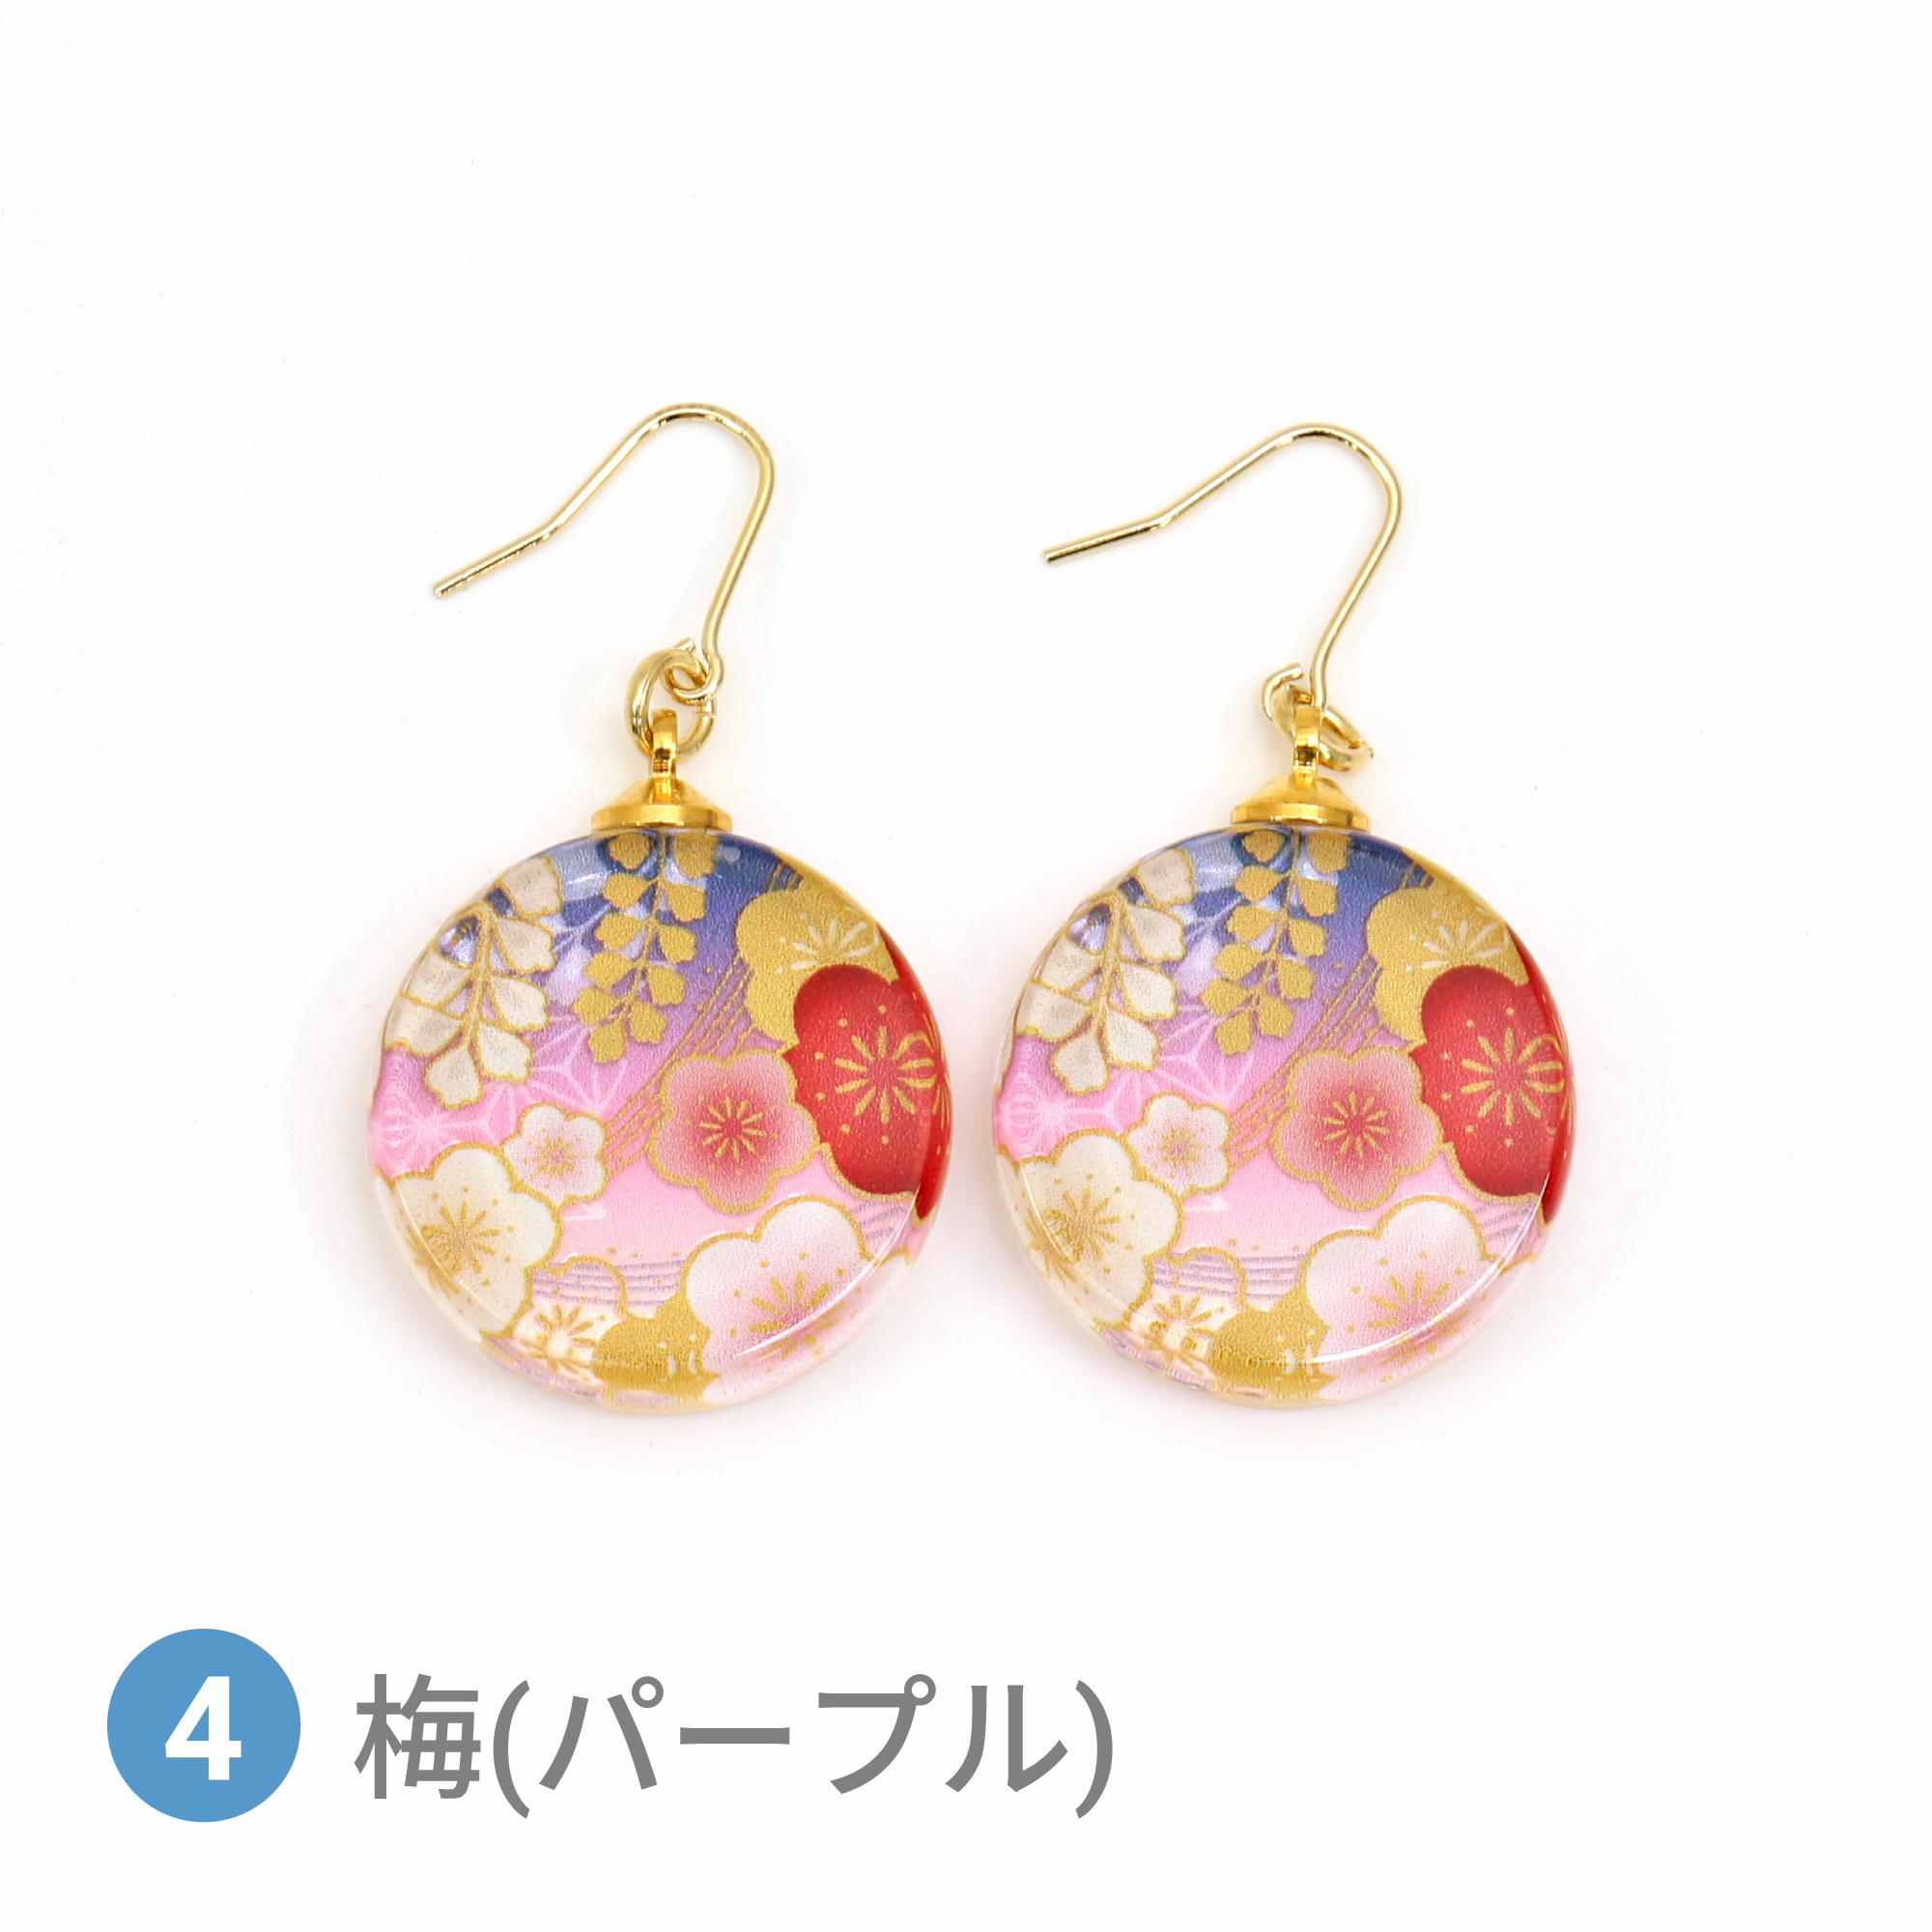 Glass accessories Pierced Earring WABANA Japanese apricot purple round shape